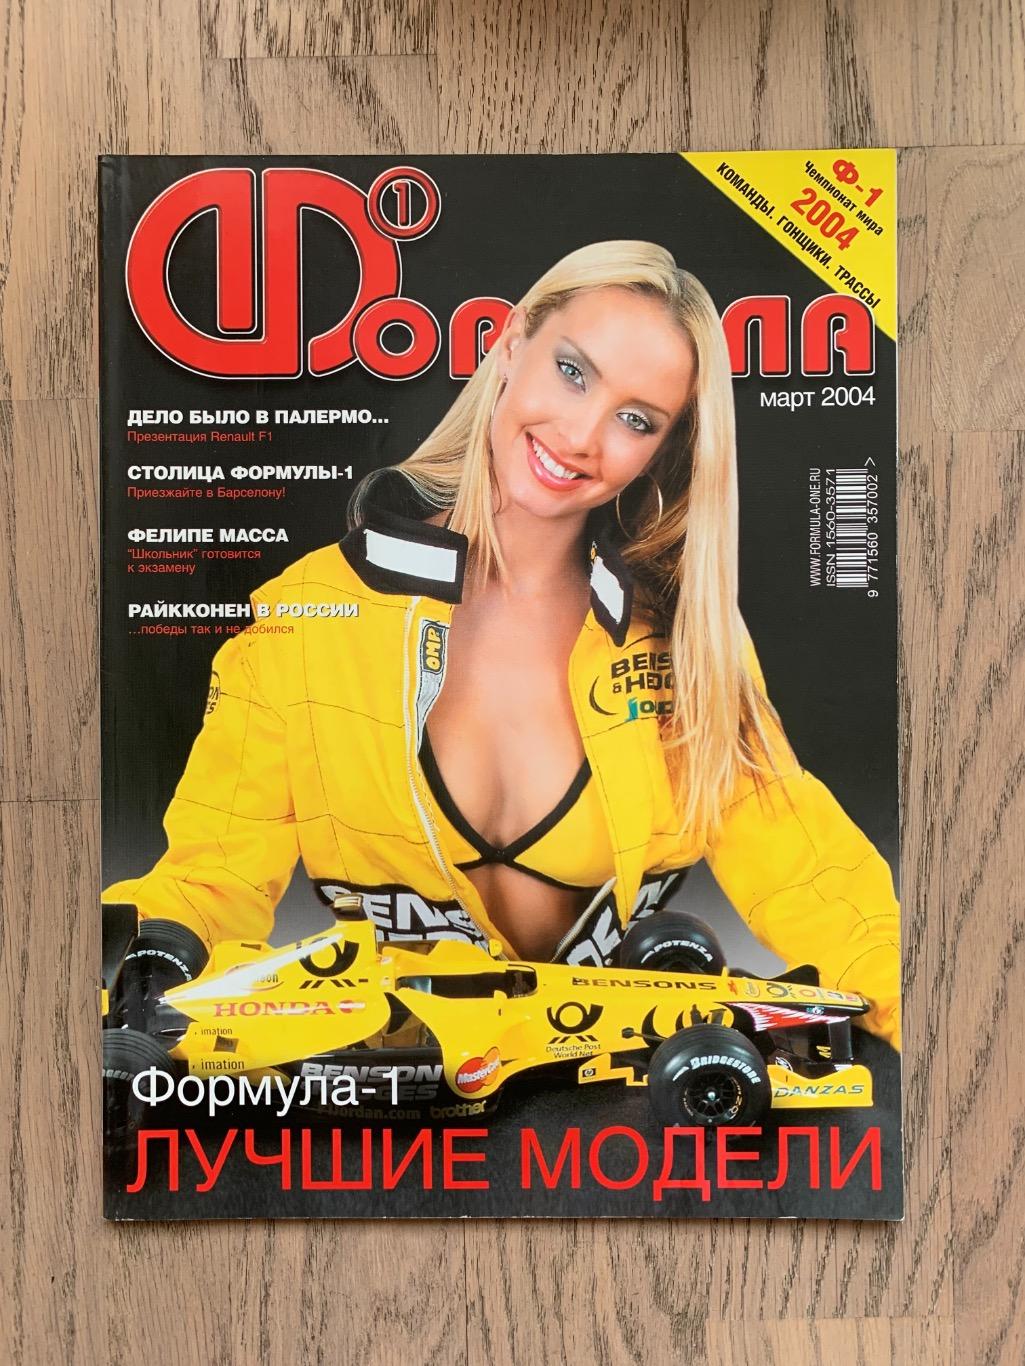 Журнал Формула 1 (Formula Magazine) / март 2004